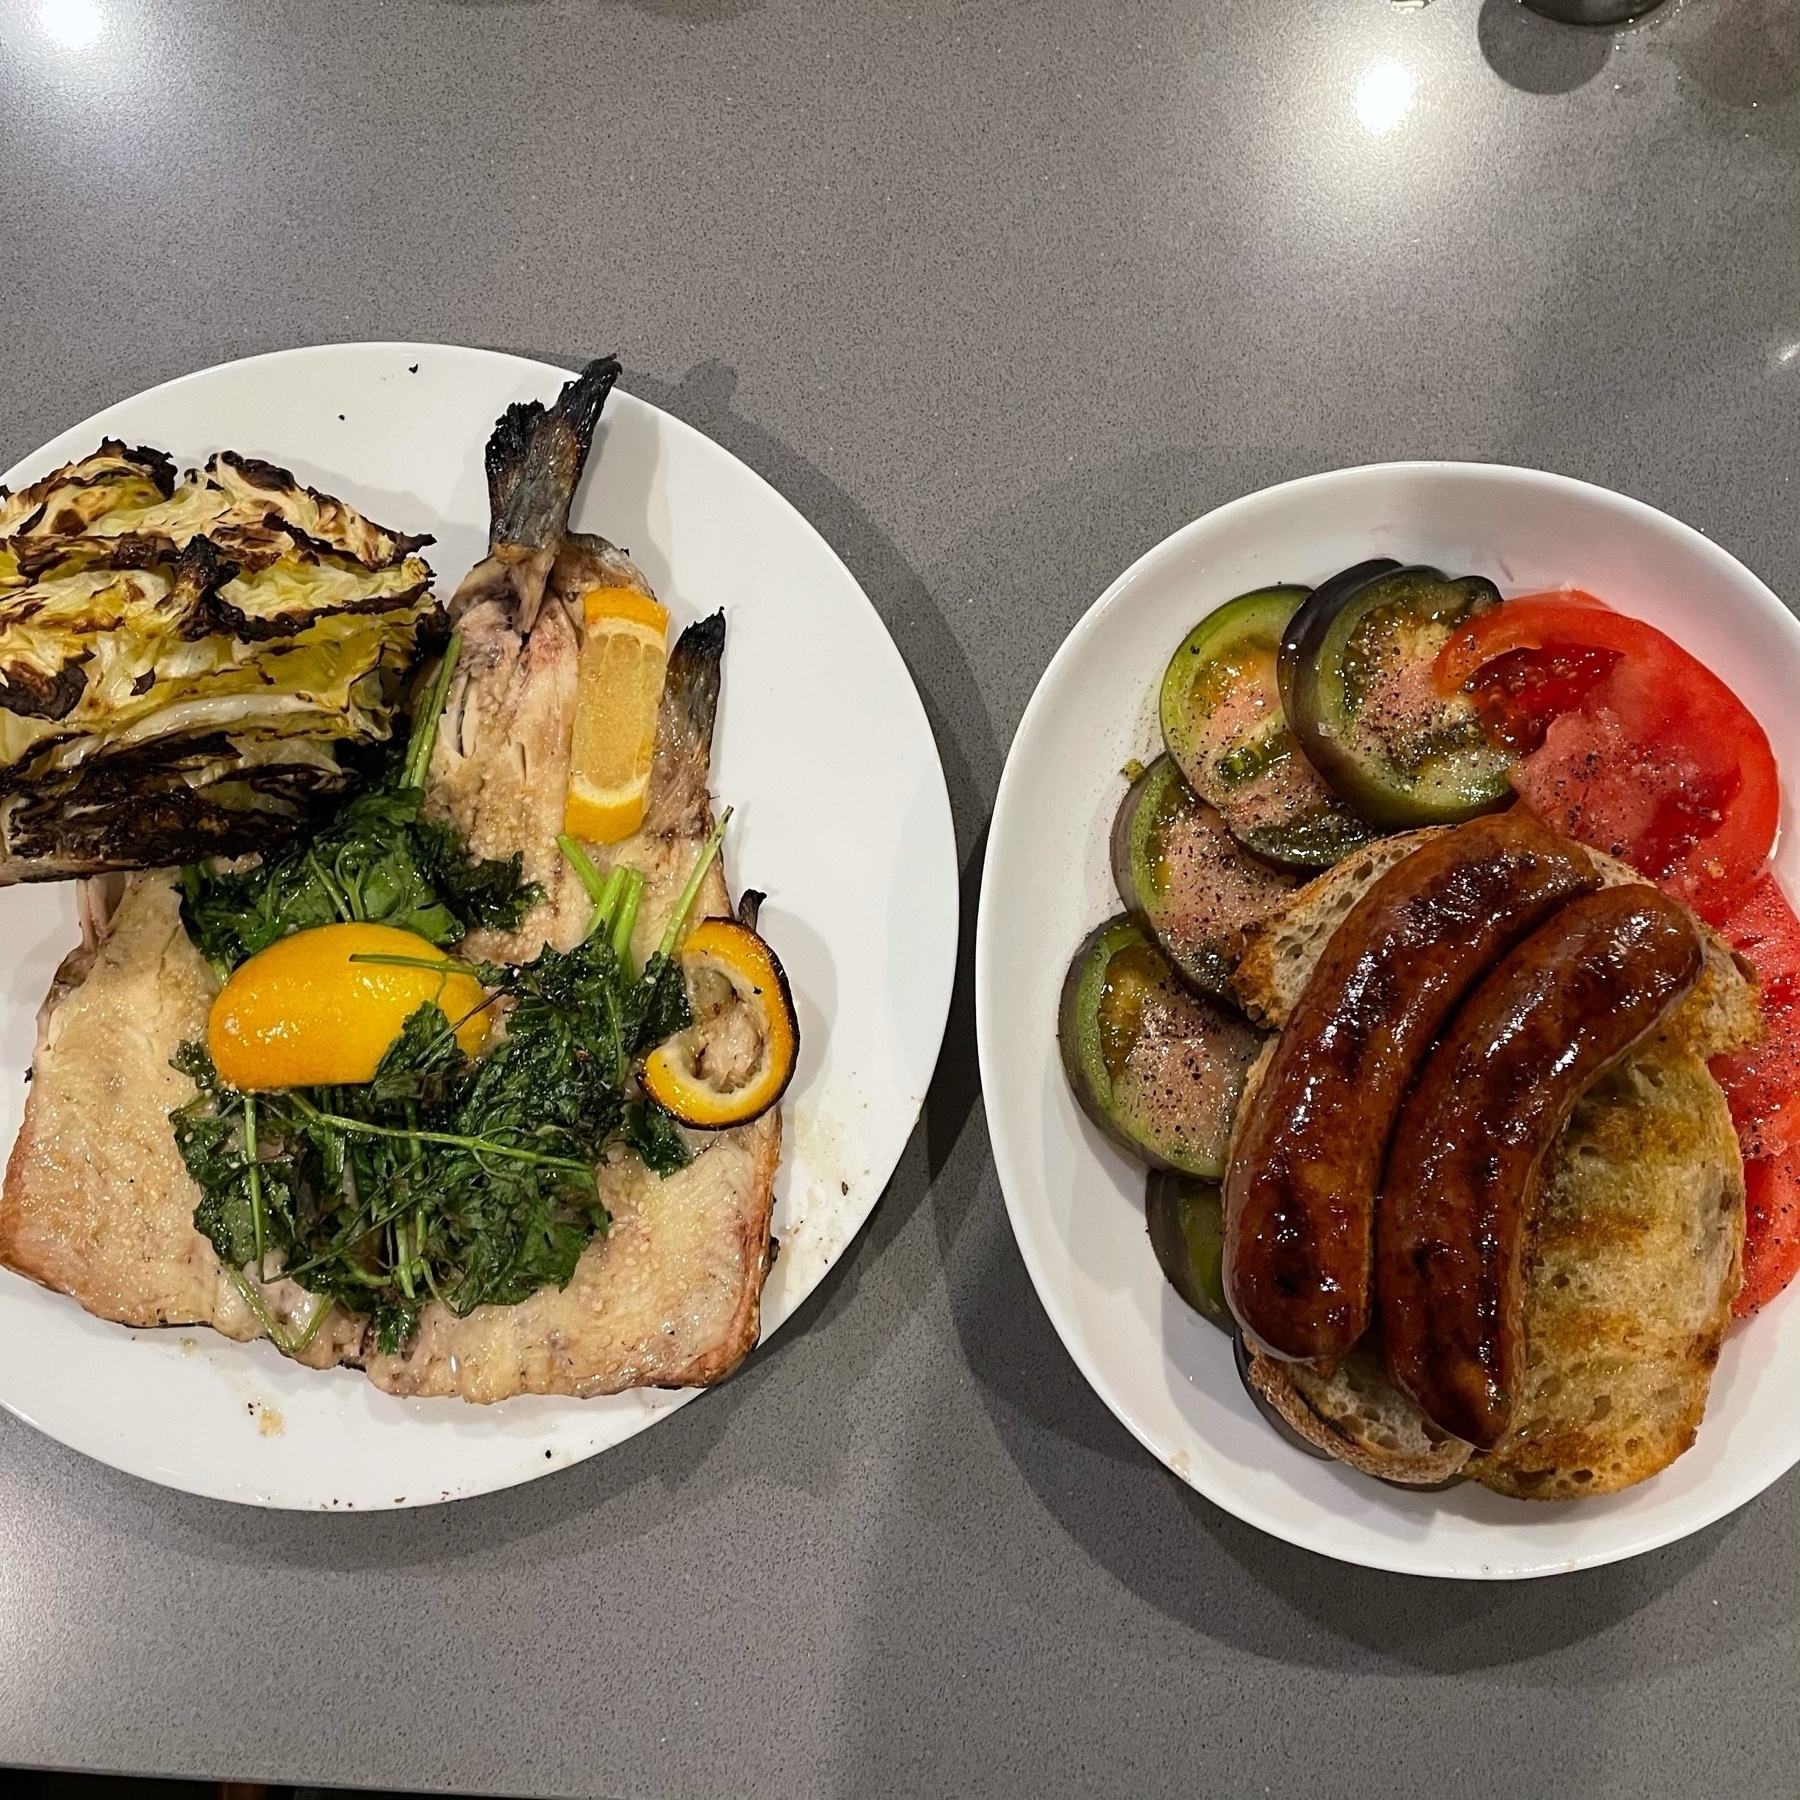 Rainbow trout, charred cabbage, tomato salad, charred sourdough, and chorizo sausage.